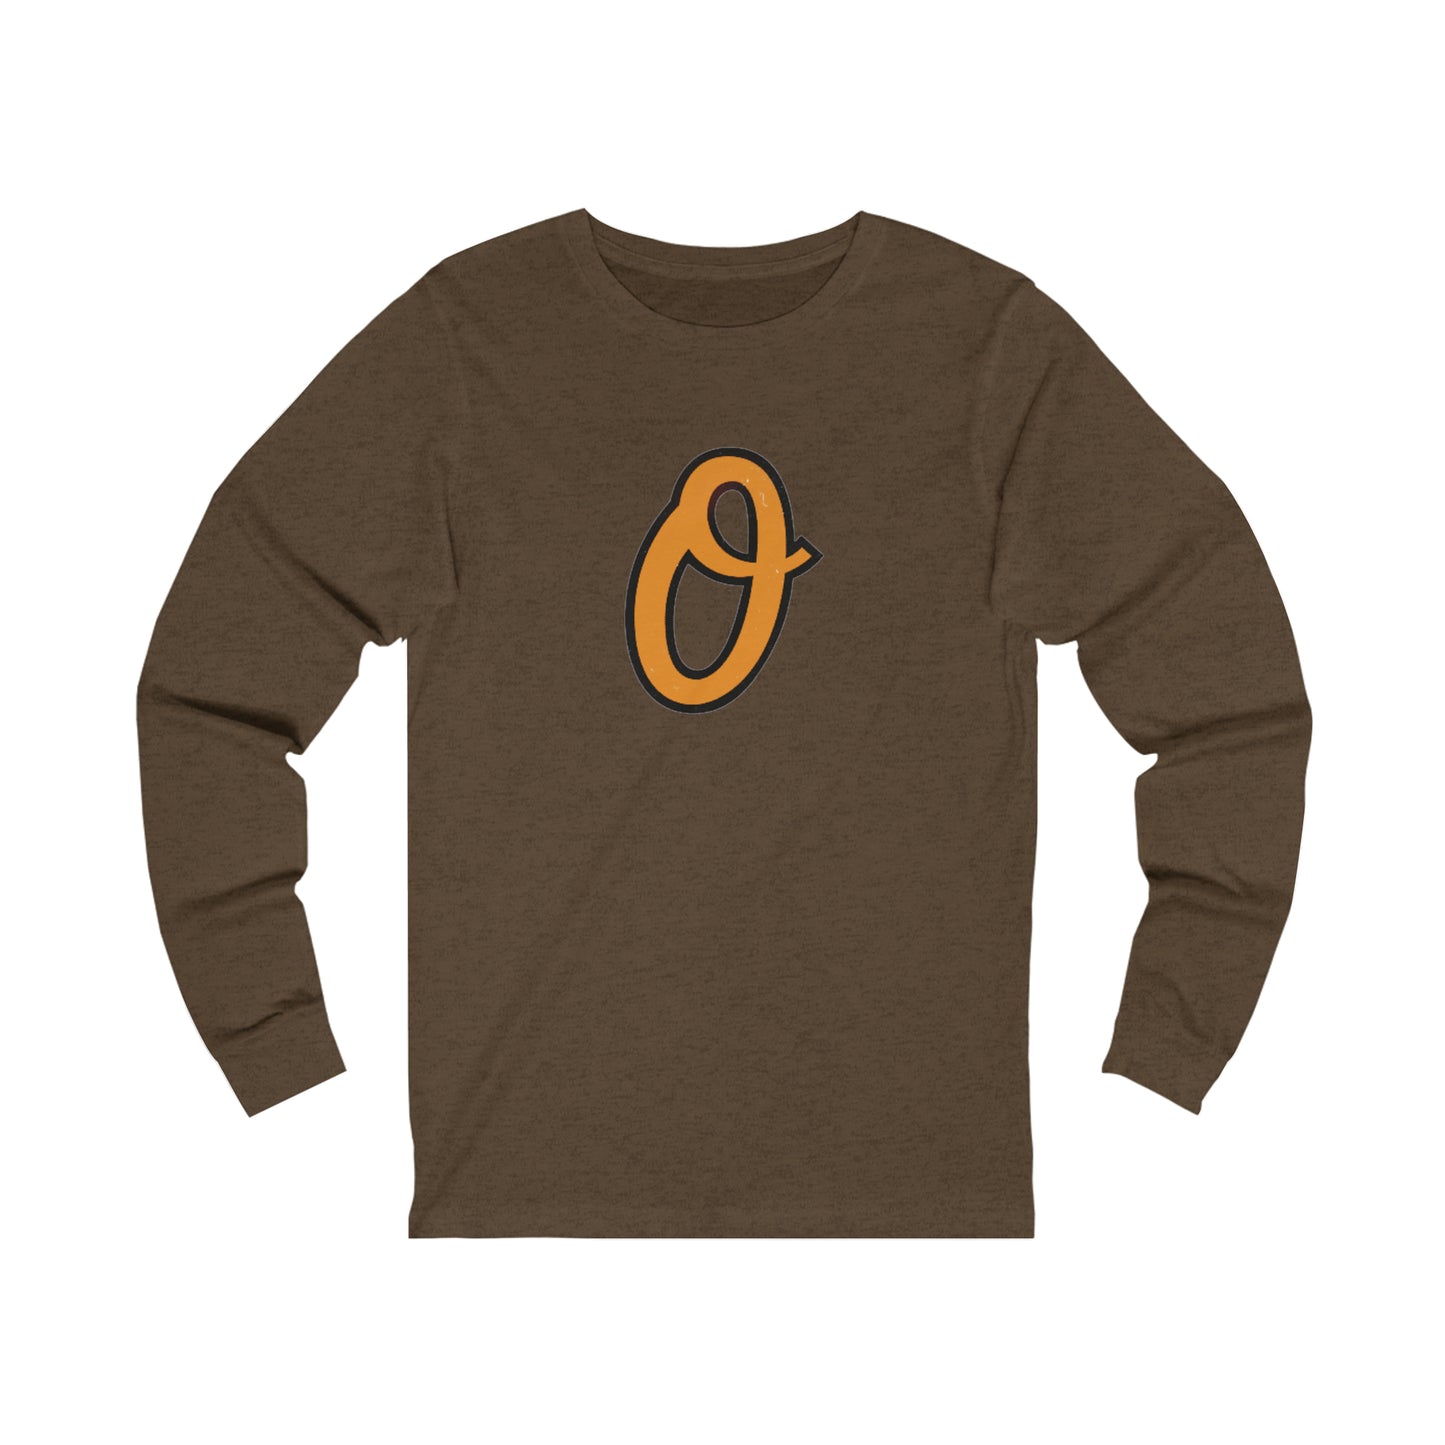 Omar Comin “O” Long Sleeve T-shirt